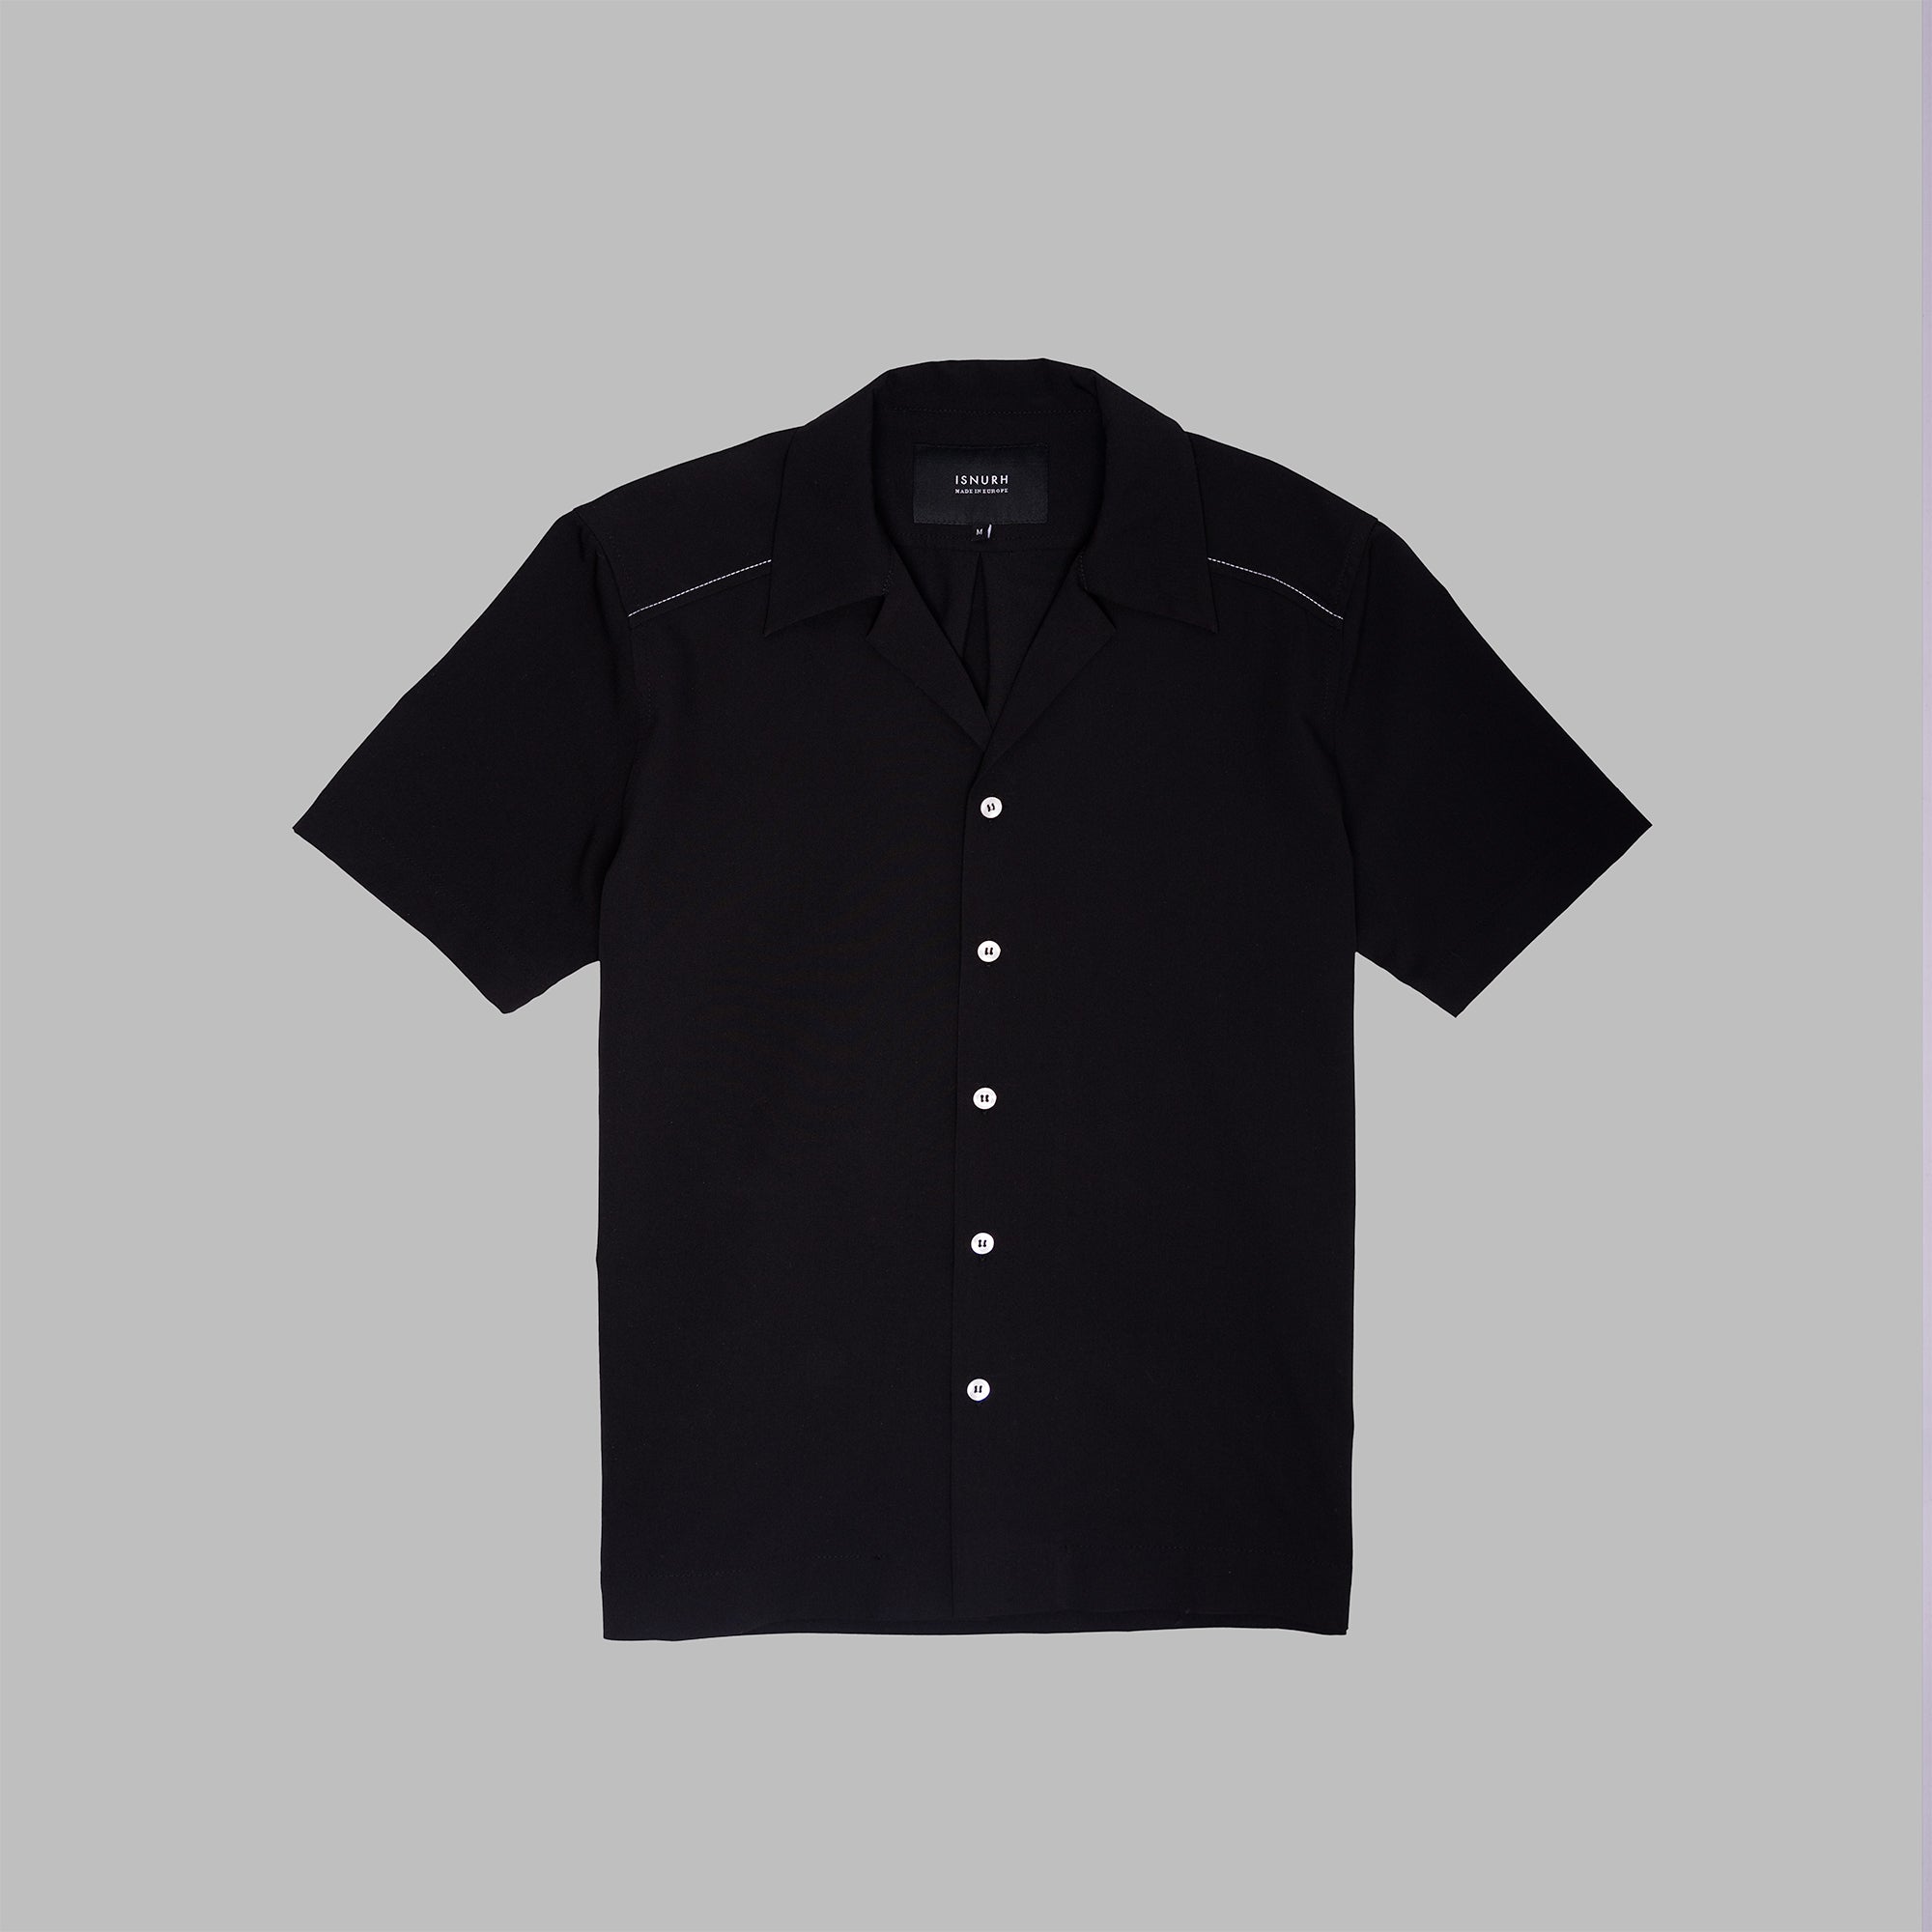 Stitch Shirt - Black